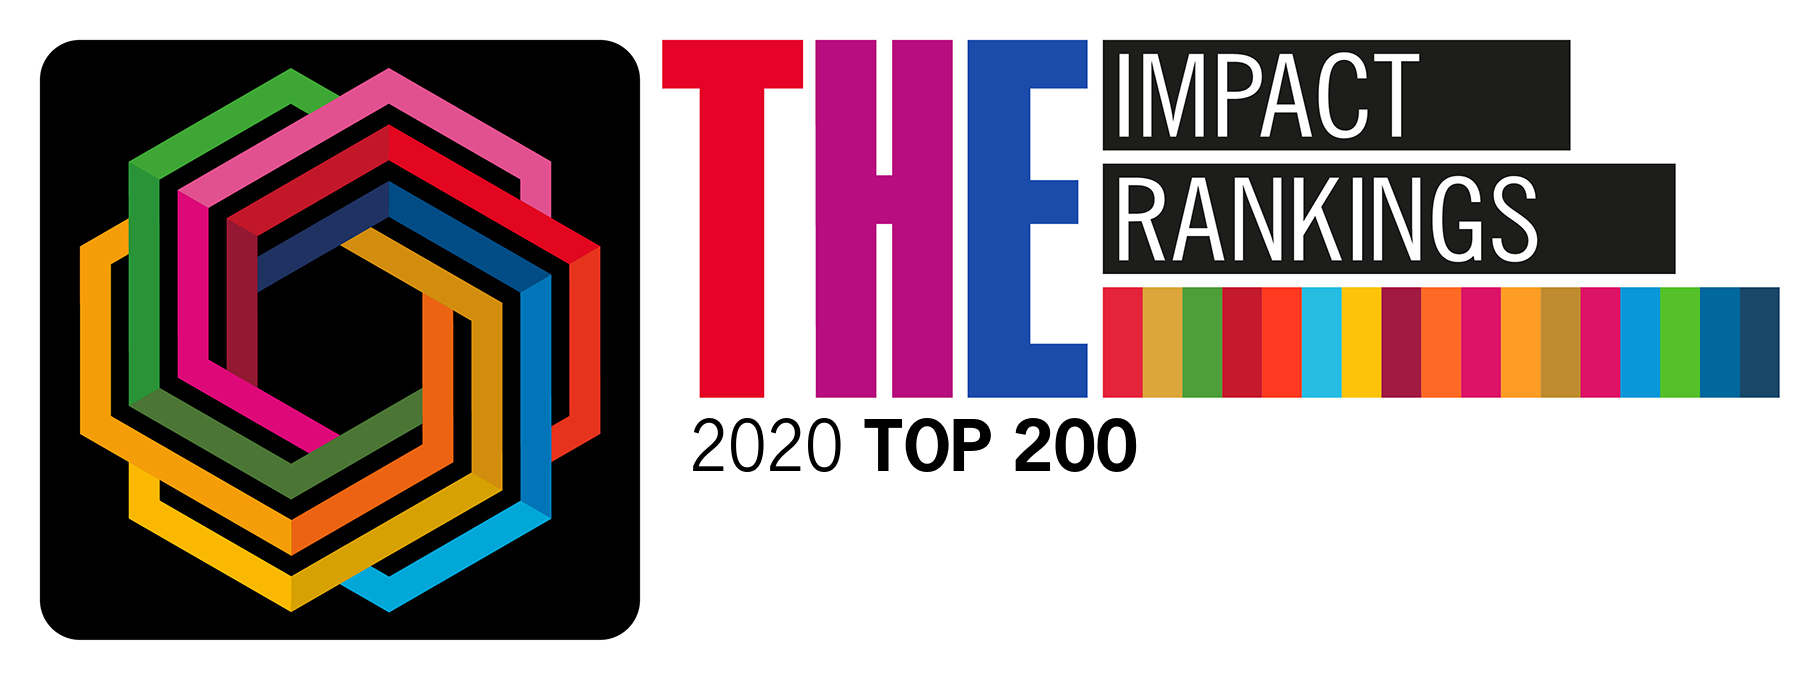 impact rankings logo